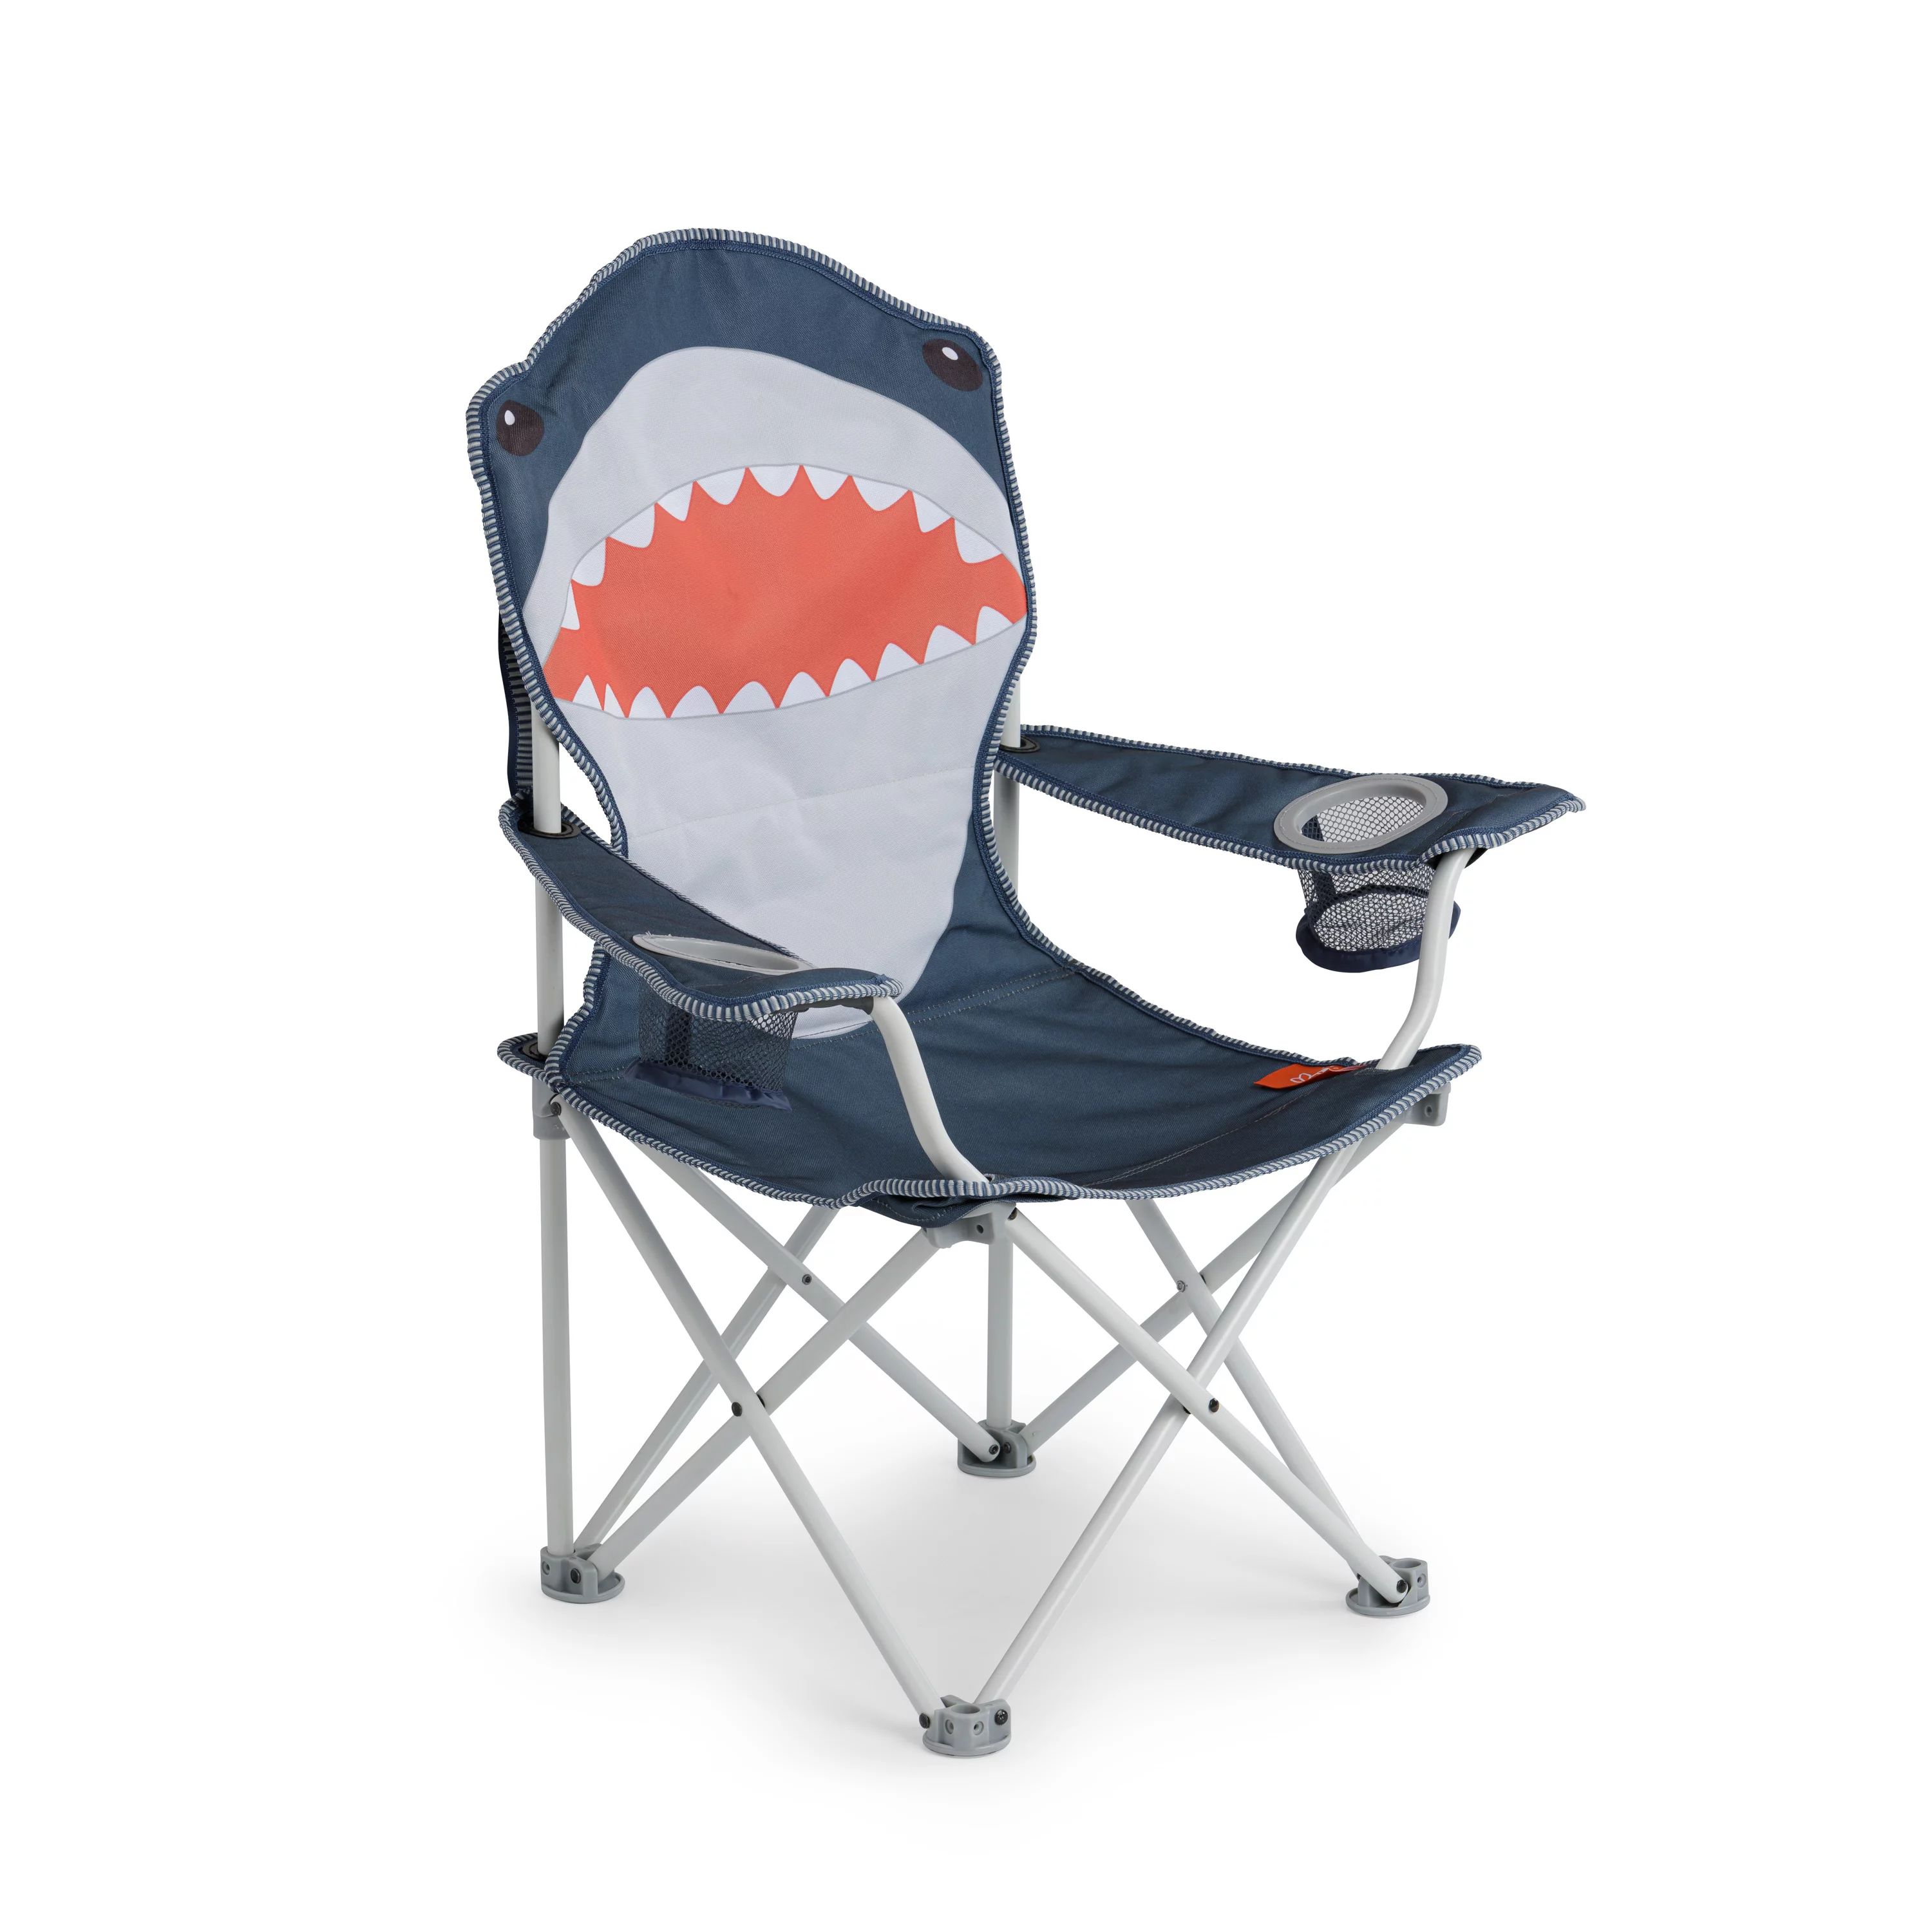 Firefly! Outdoor Gear Finn the Shark Kid's Camping Chair - Navy/Orange/Gray Color - Walmart.com | Walmart (US)